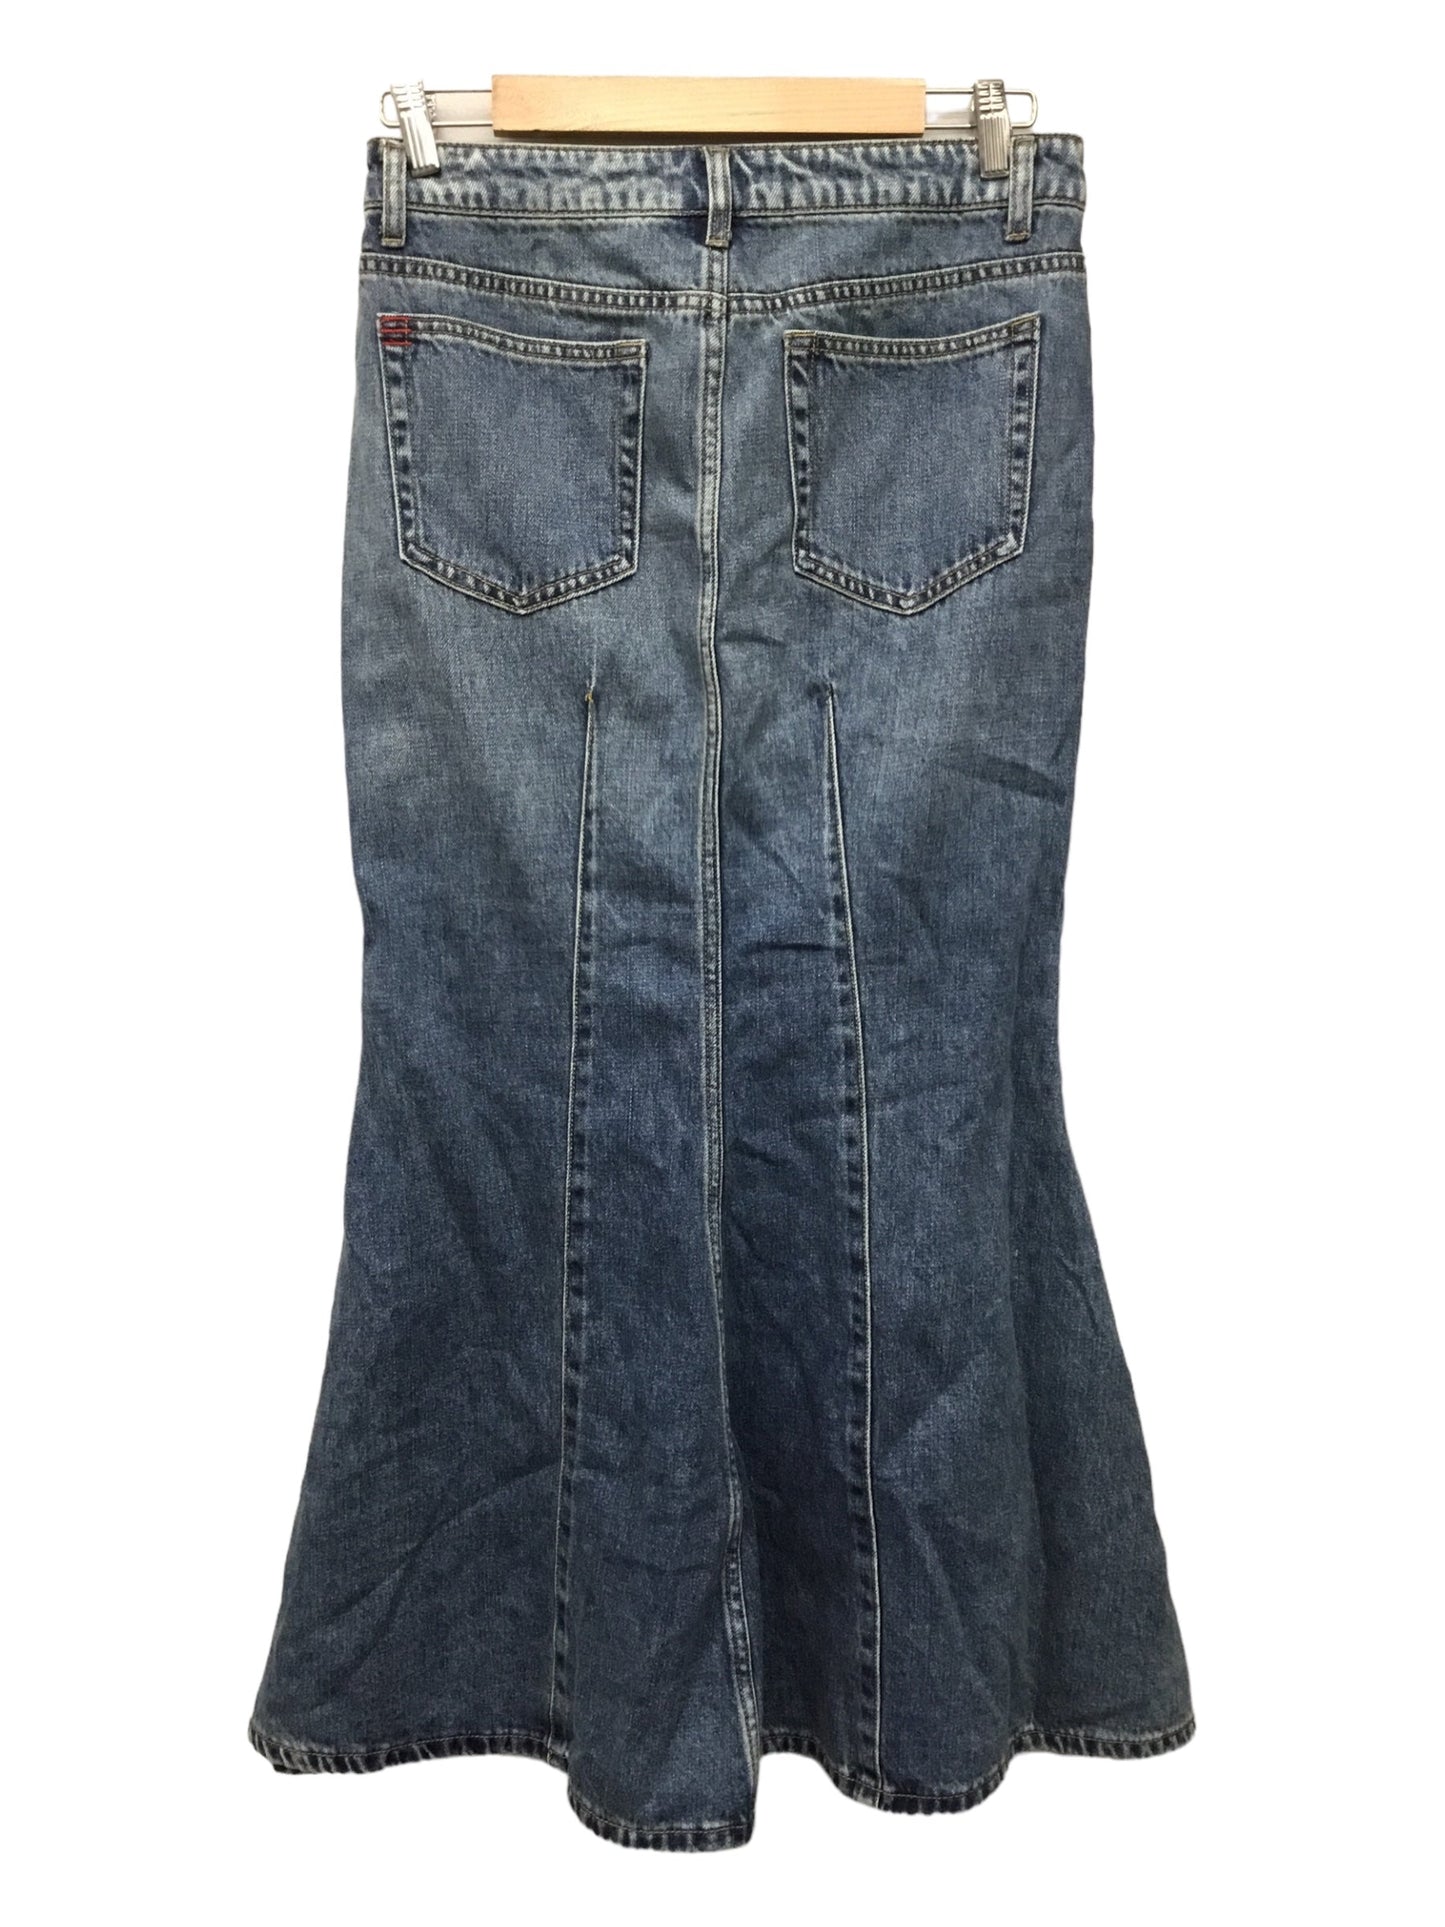 NWT Blue Denim Skirt Maxi Bdg, Size S